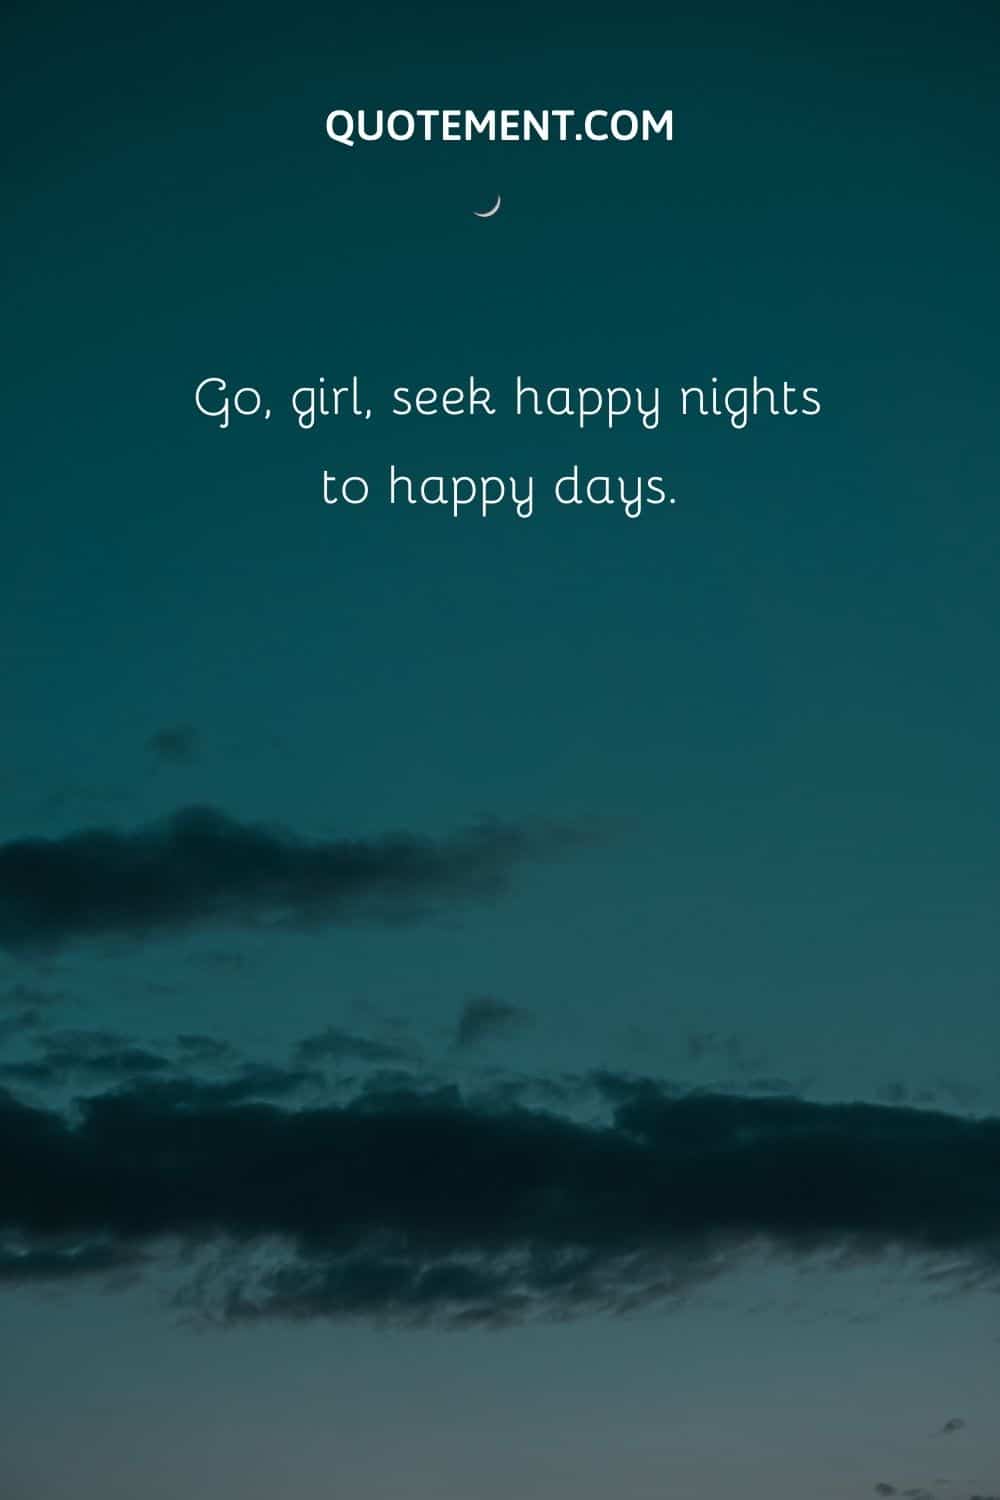 Go, girl, seek happy nights to happy days